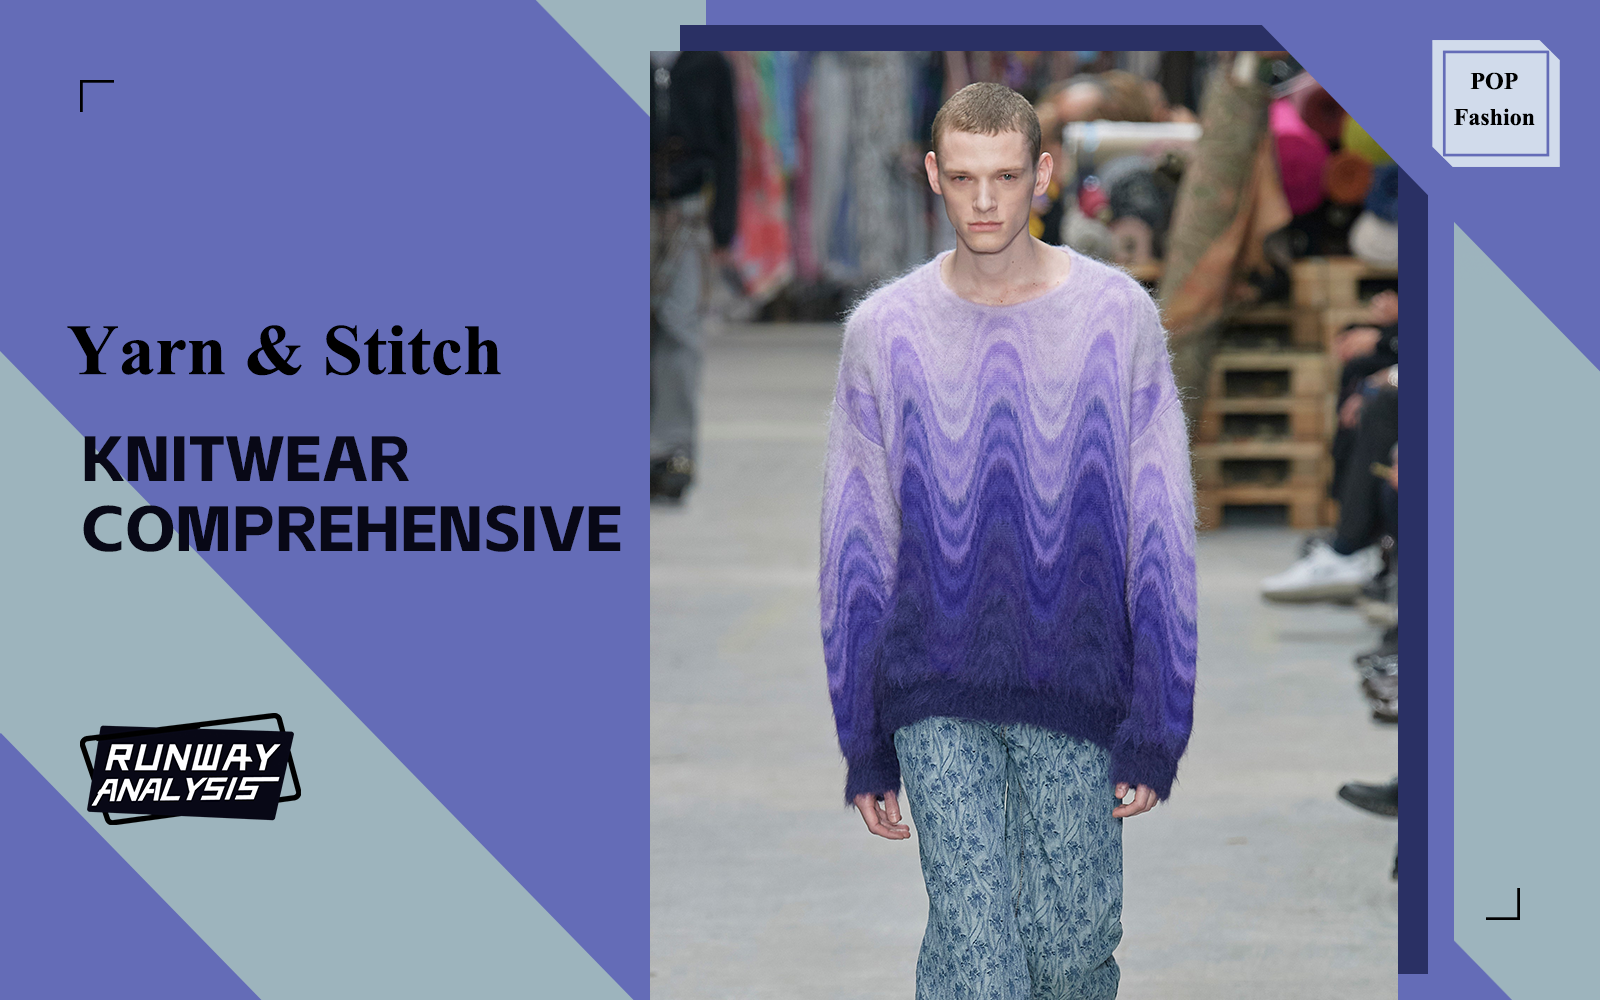 Yarn & Stitch -- The Comprehensive Runway Analysis of Men's Knitwear